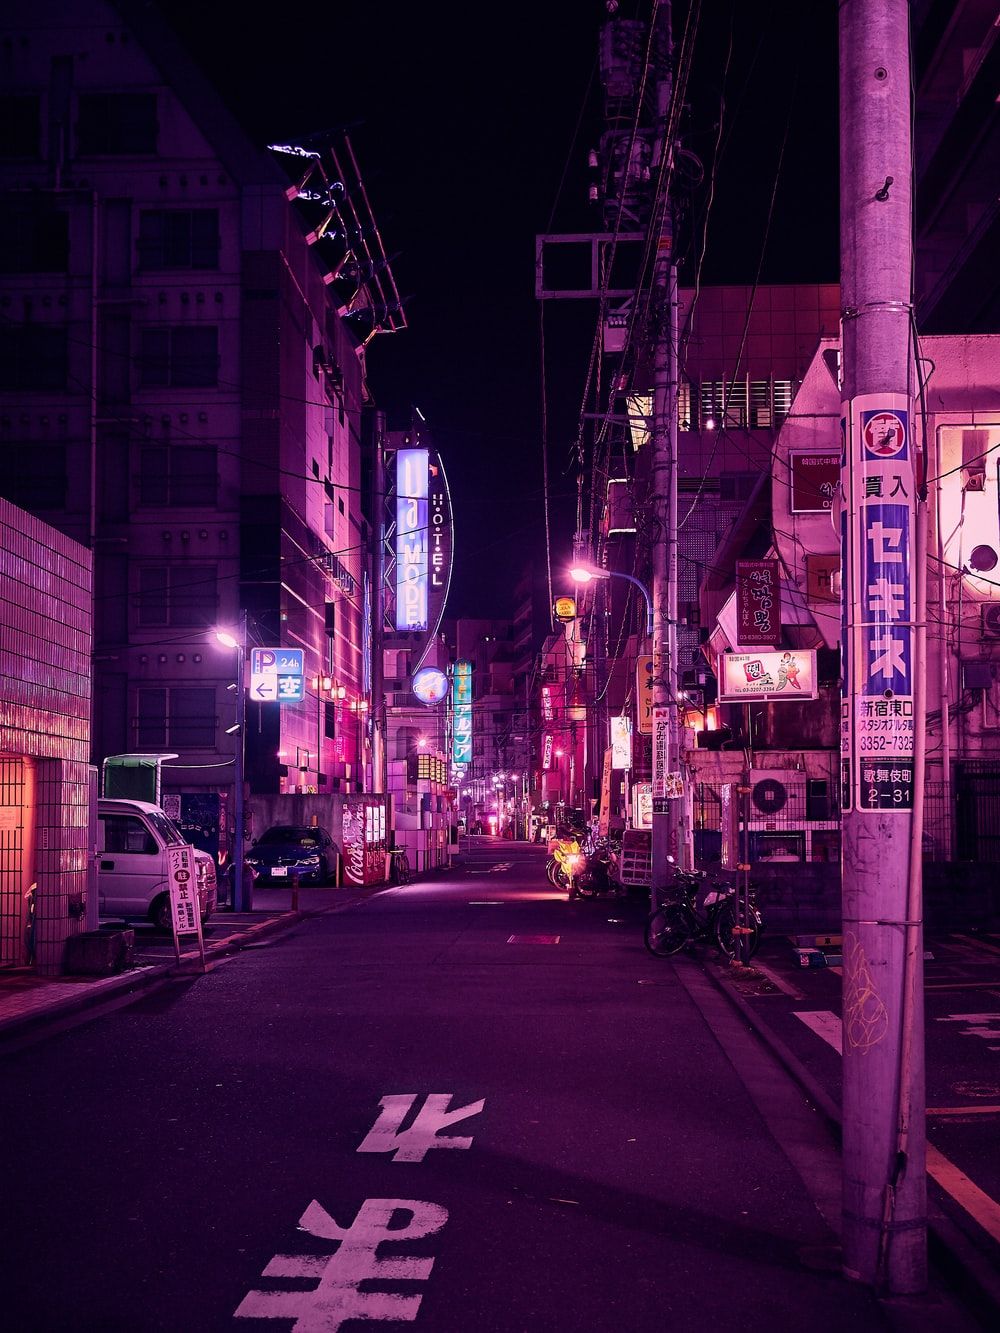 100+ Tokyo Pictures [Scenic Travel Photos]